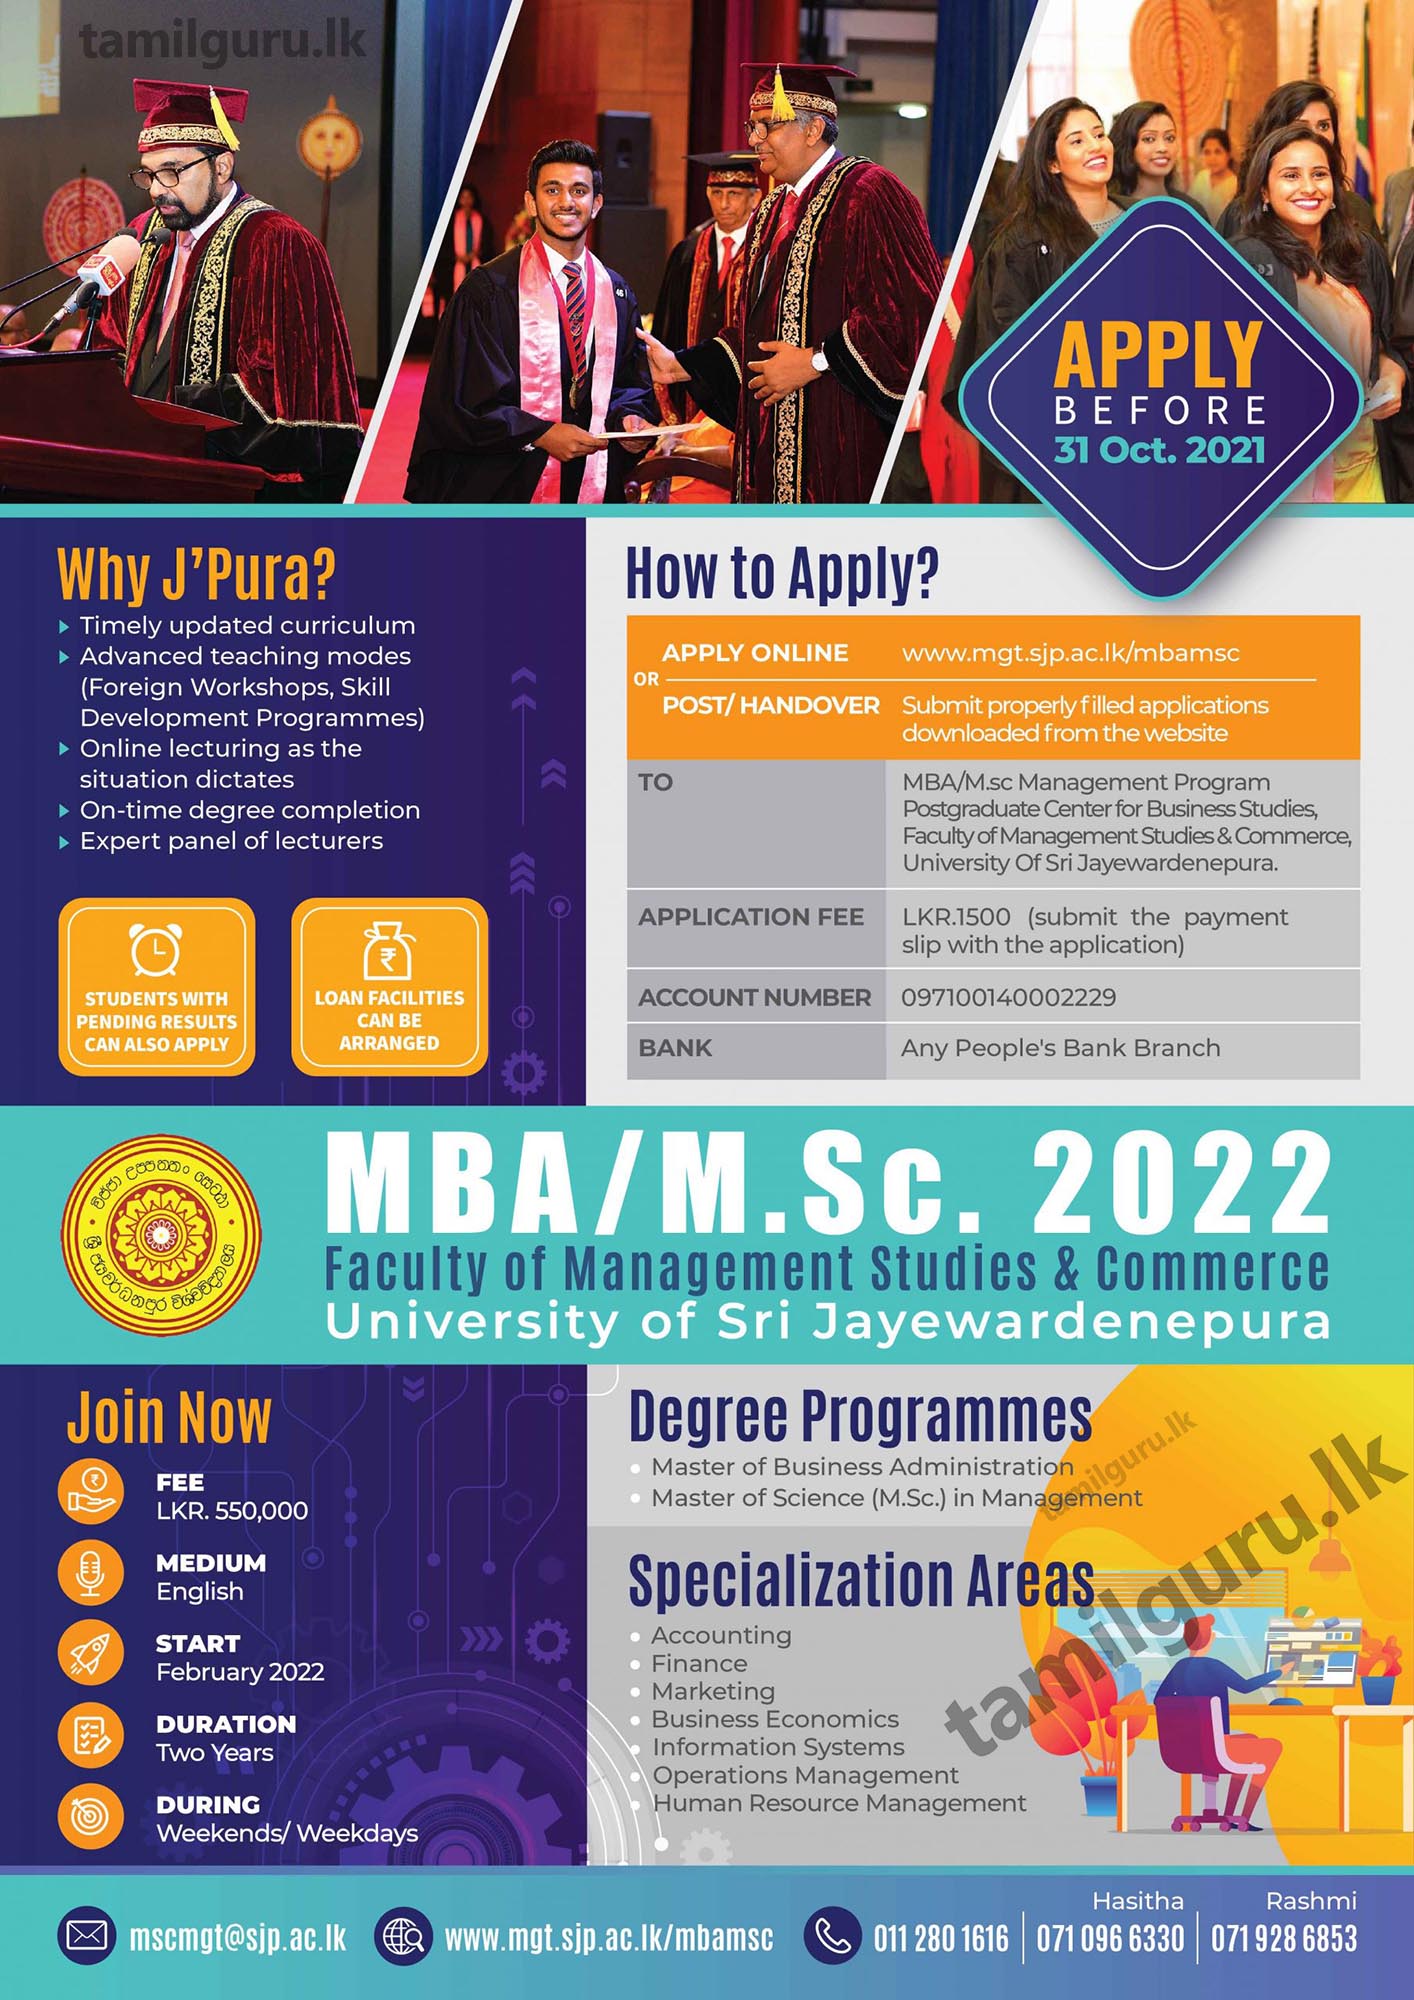 Master of Business Administration (MBA) / MSc in Management 2022 - University of Sri Jayewardenepura 